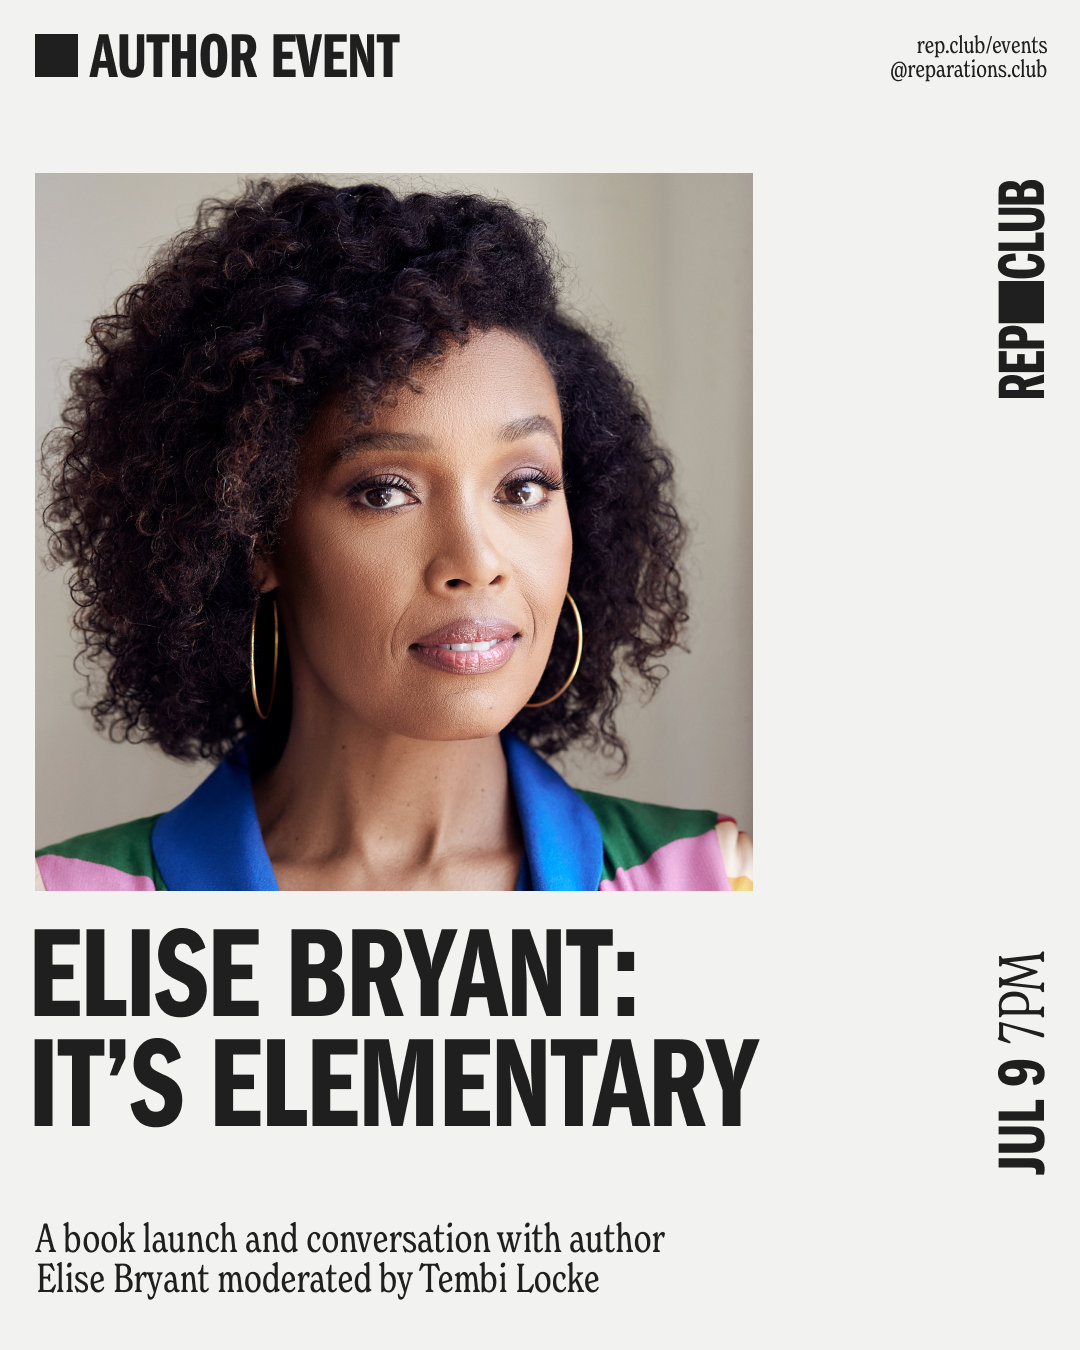 July 9th EVENT: It's Elementary // Elise Bryant + Tembi Locke